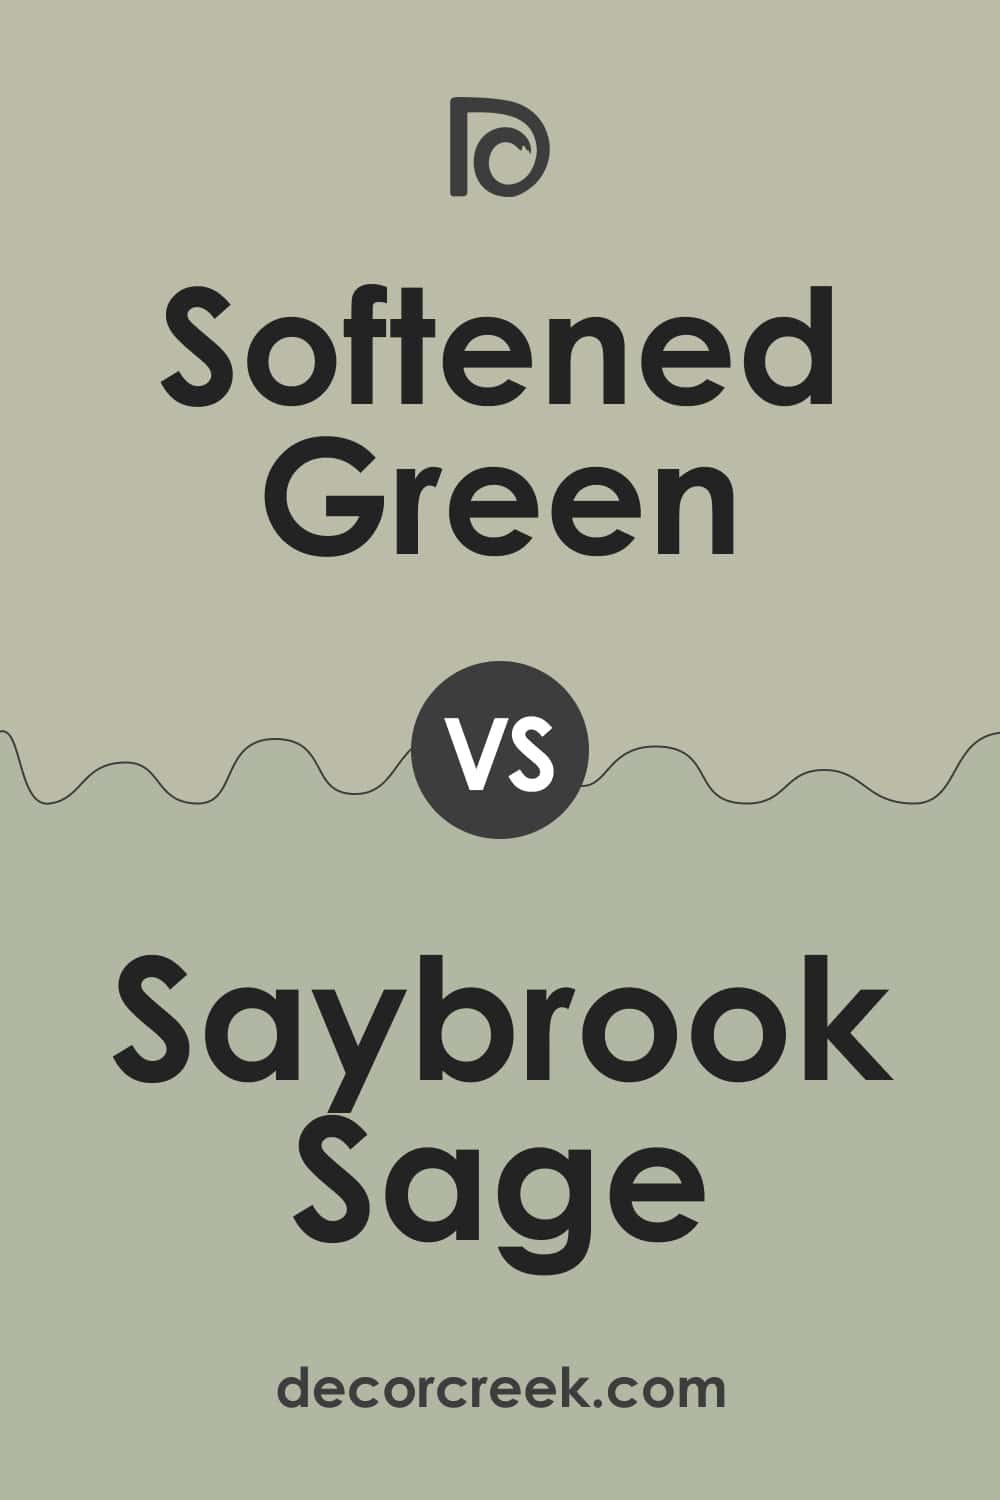 Softened Green vs Saybrook Sage